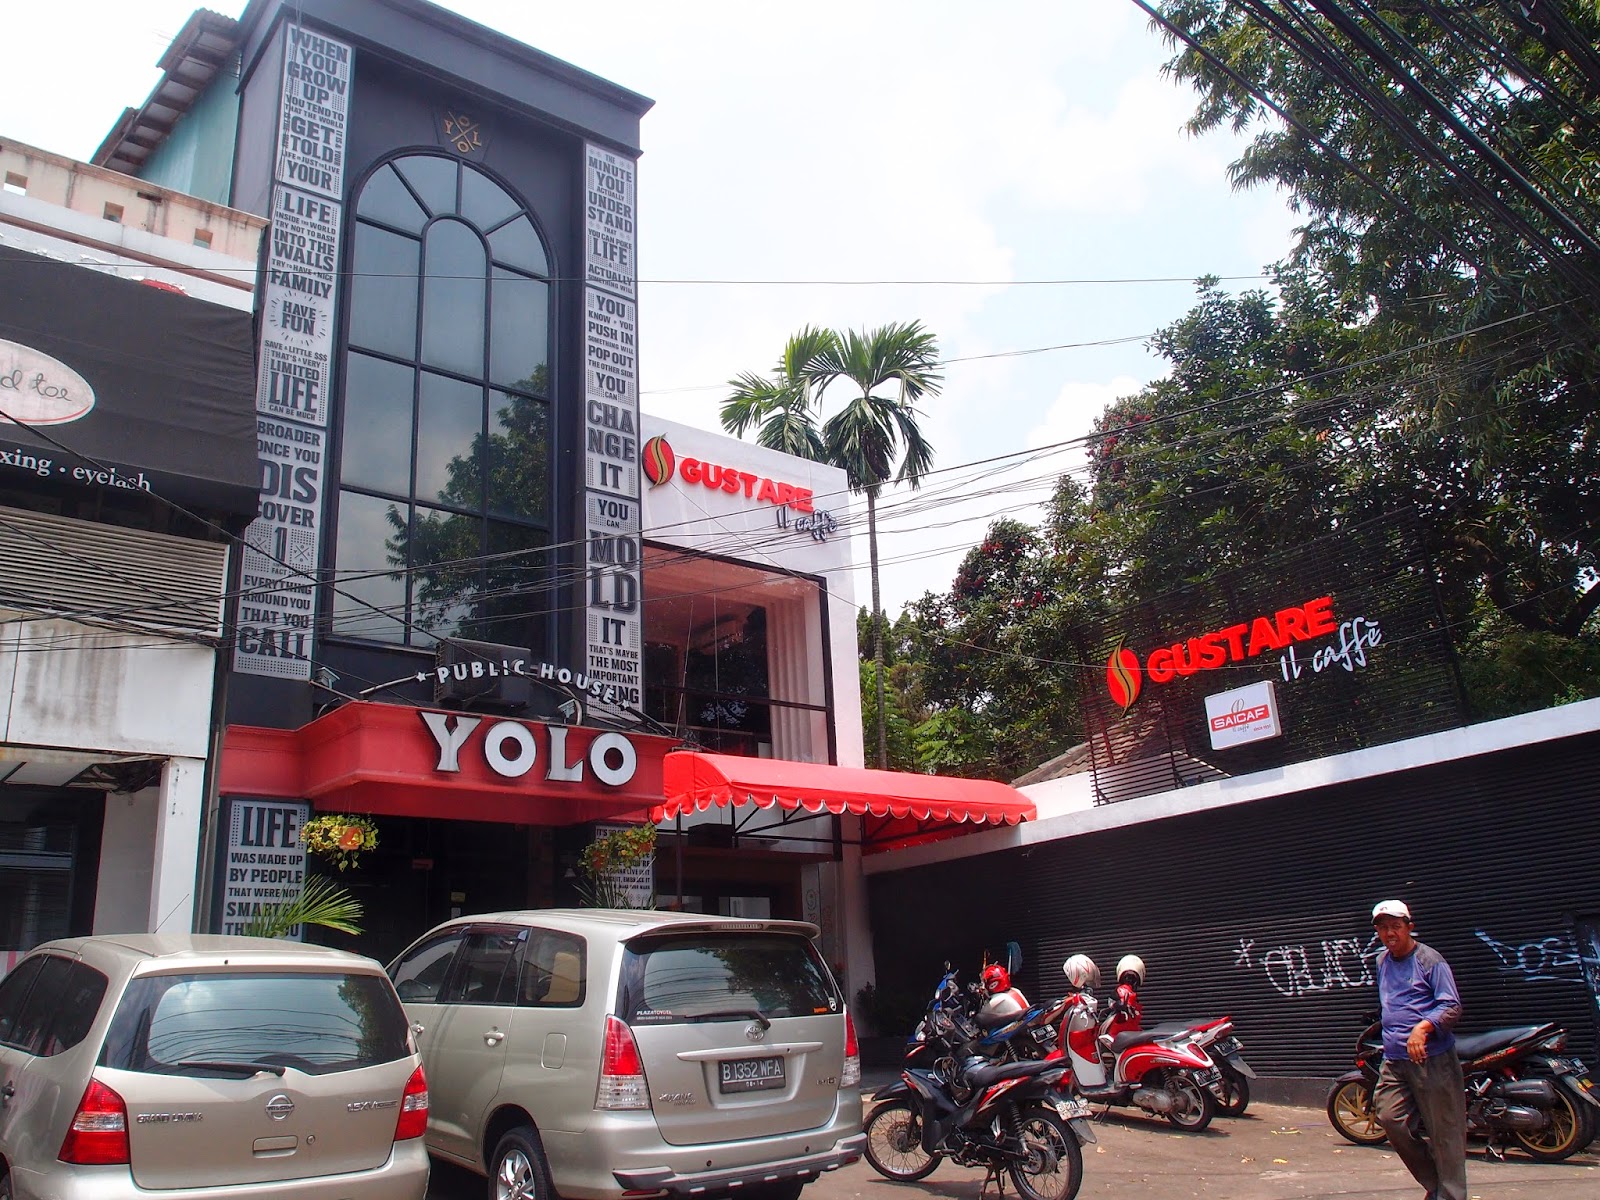 Restaurants, Bars & Clubs in Kemang | Jakarta100bars Nightlife Reviews